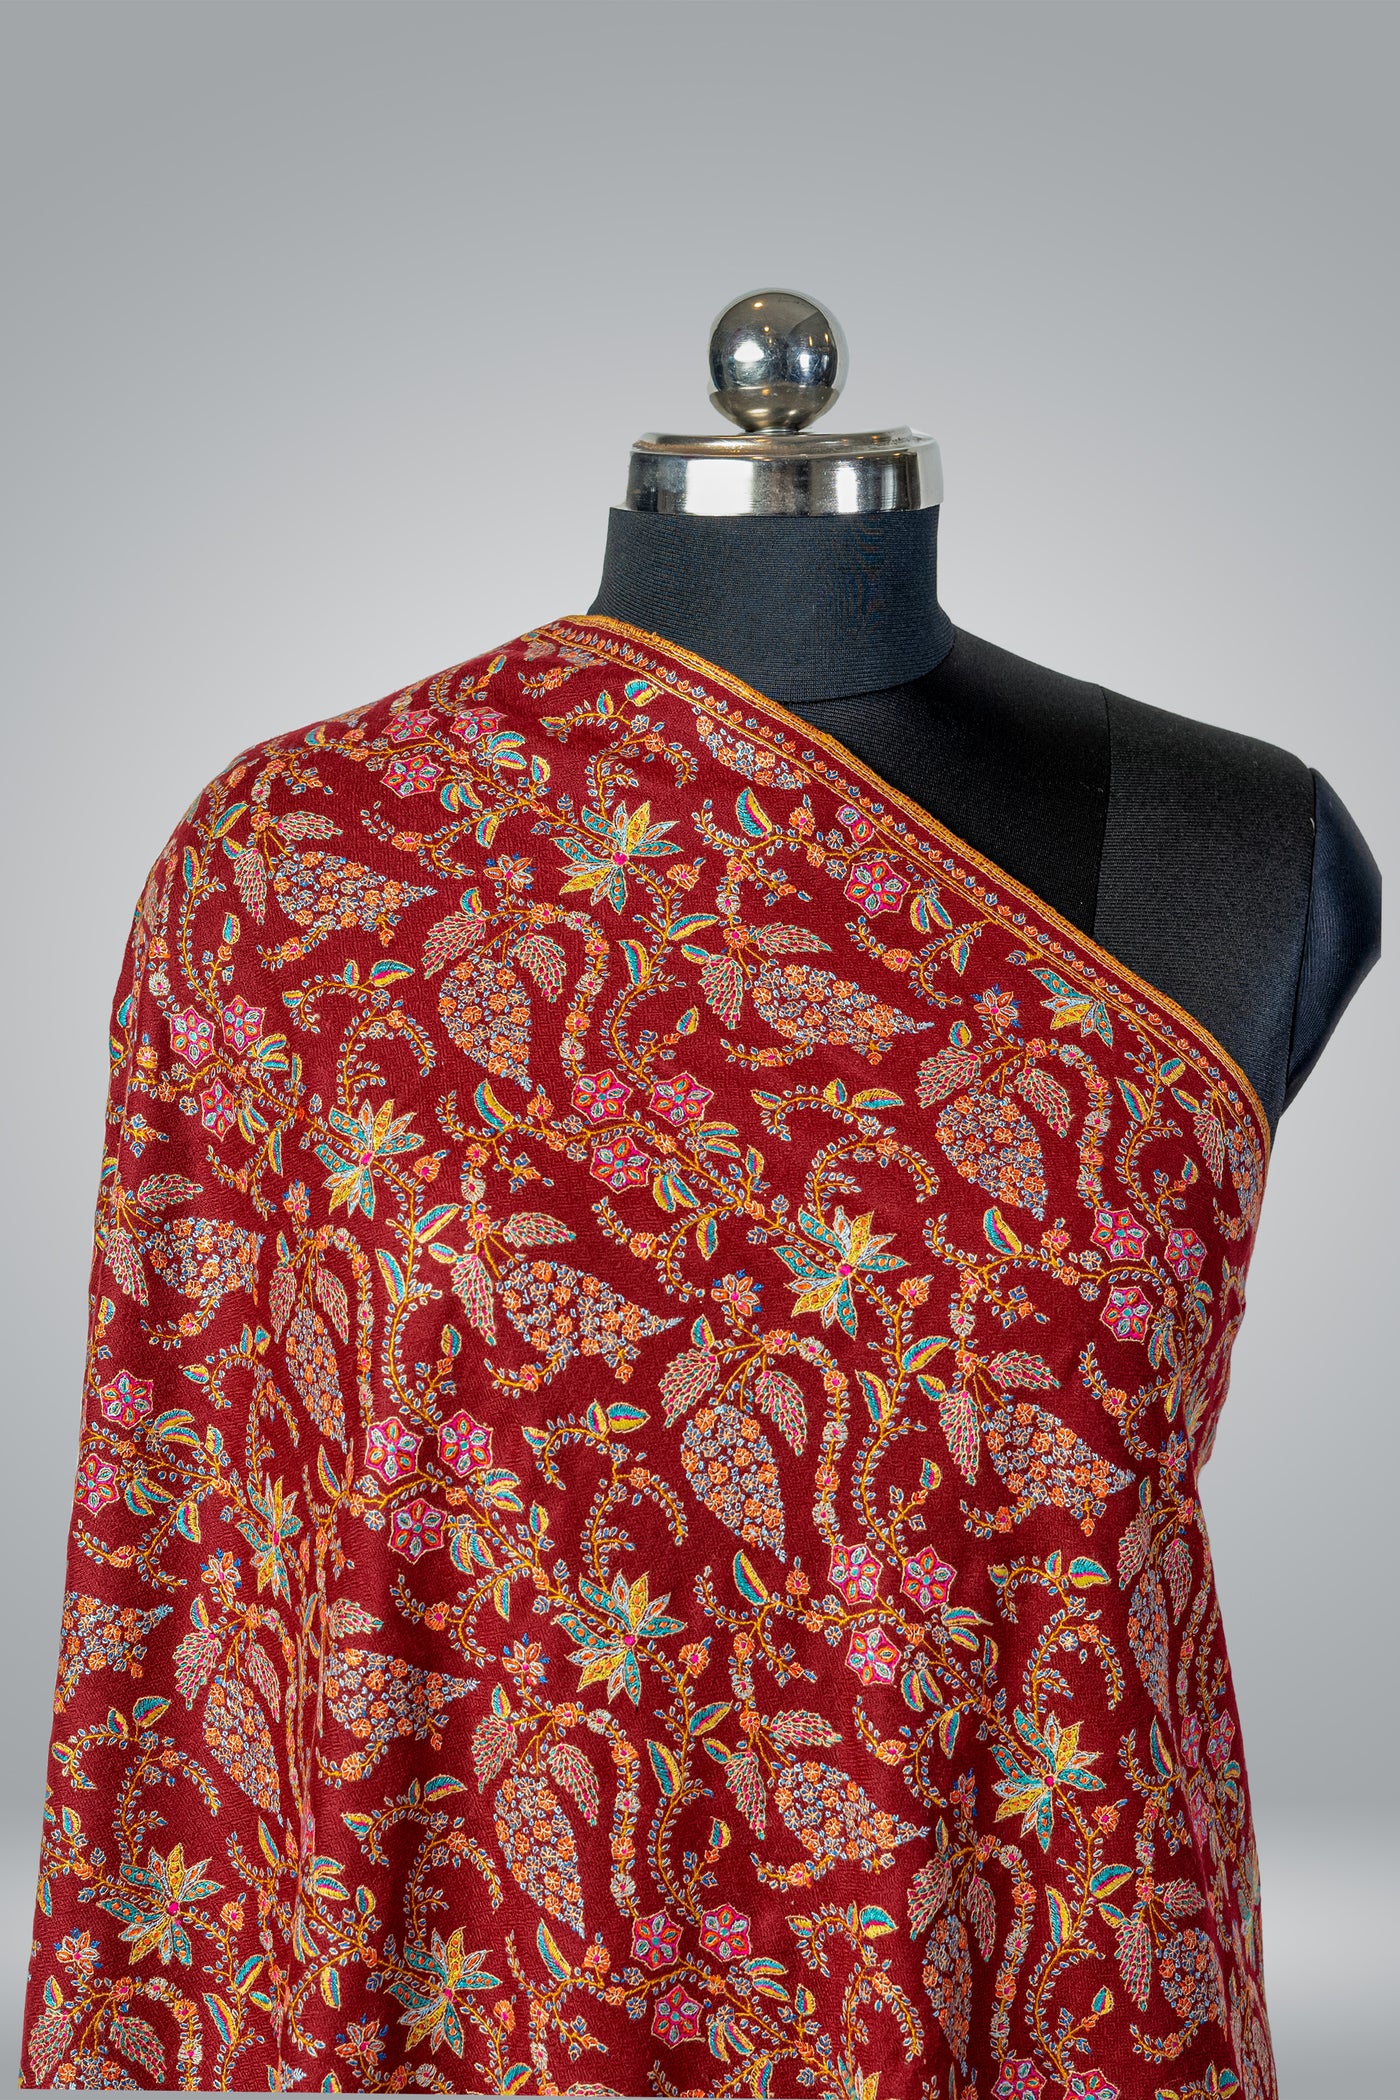 Regal Maroon Tapestry: A Luxurious Pure Pashmina Shawl Embellished with Artisanal Sozni Embroidery - KashmKari